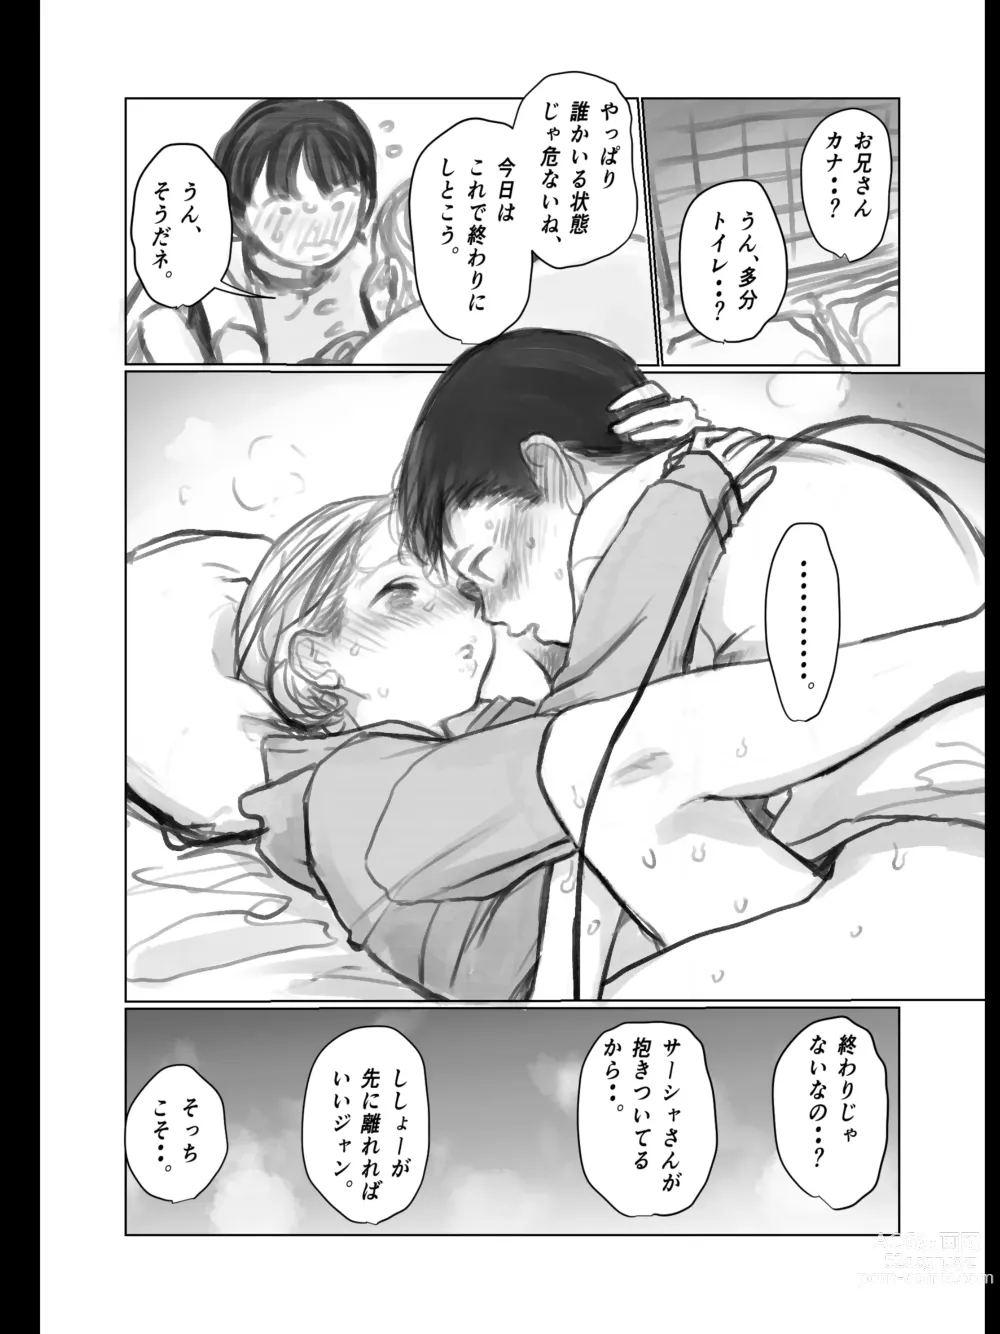 Page 30 of doujinshi Kuri Kyuuin Omocha to Sasha-chan.